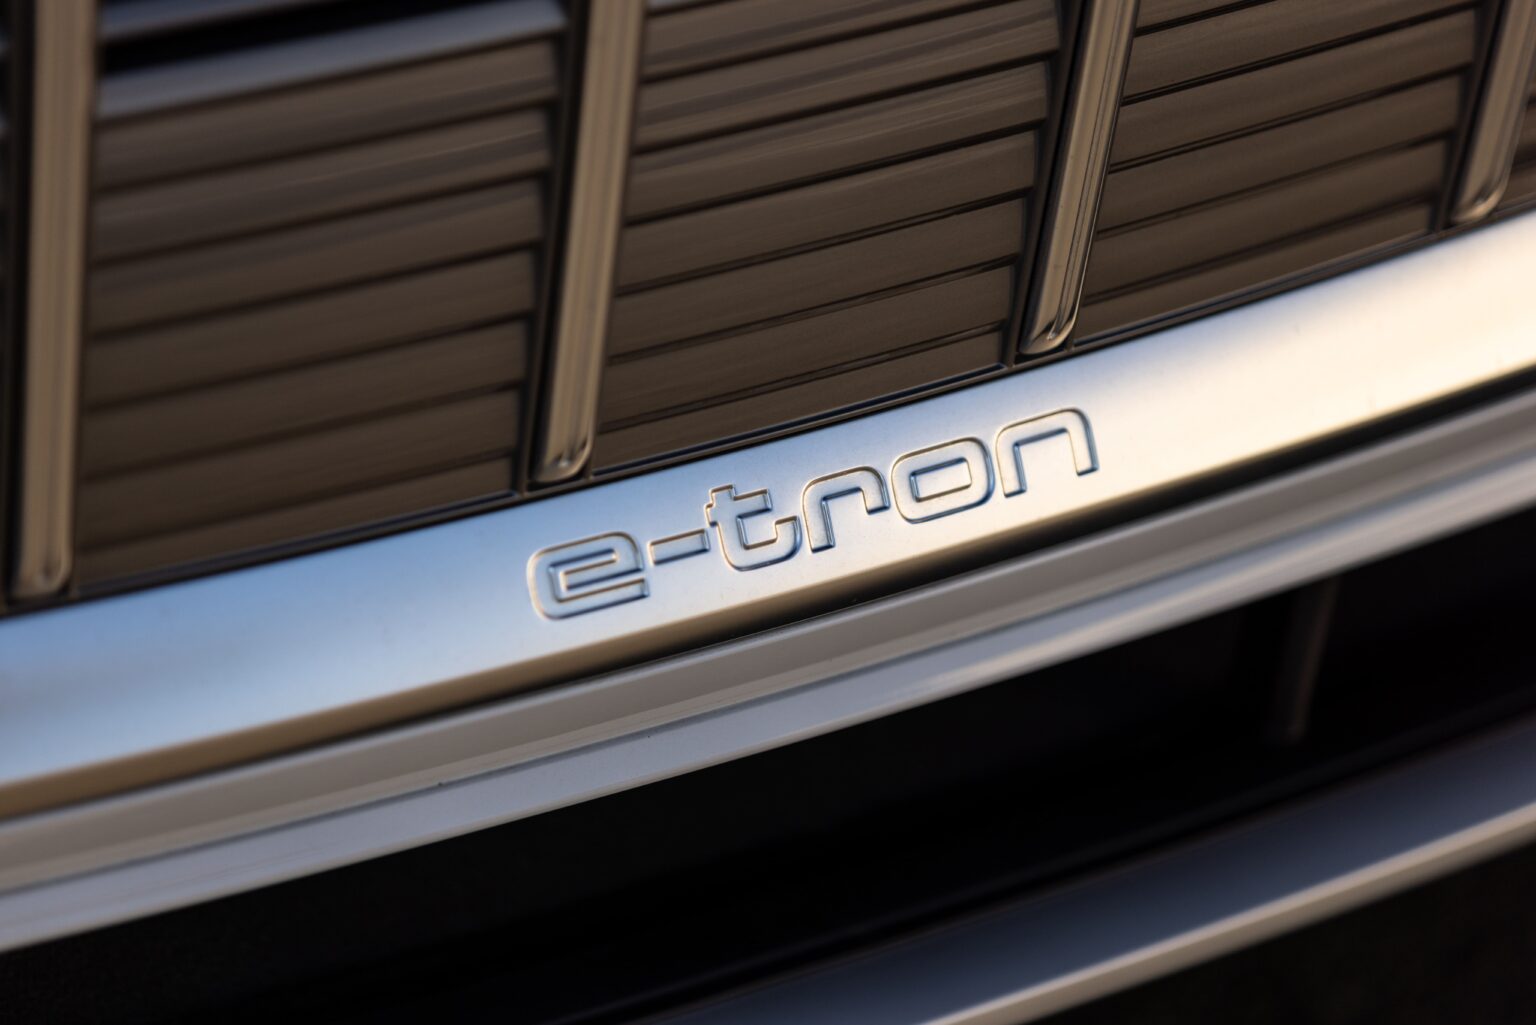 2023 Audi e-tron Exterior Image 33